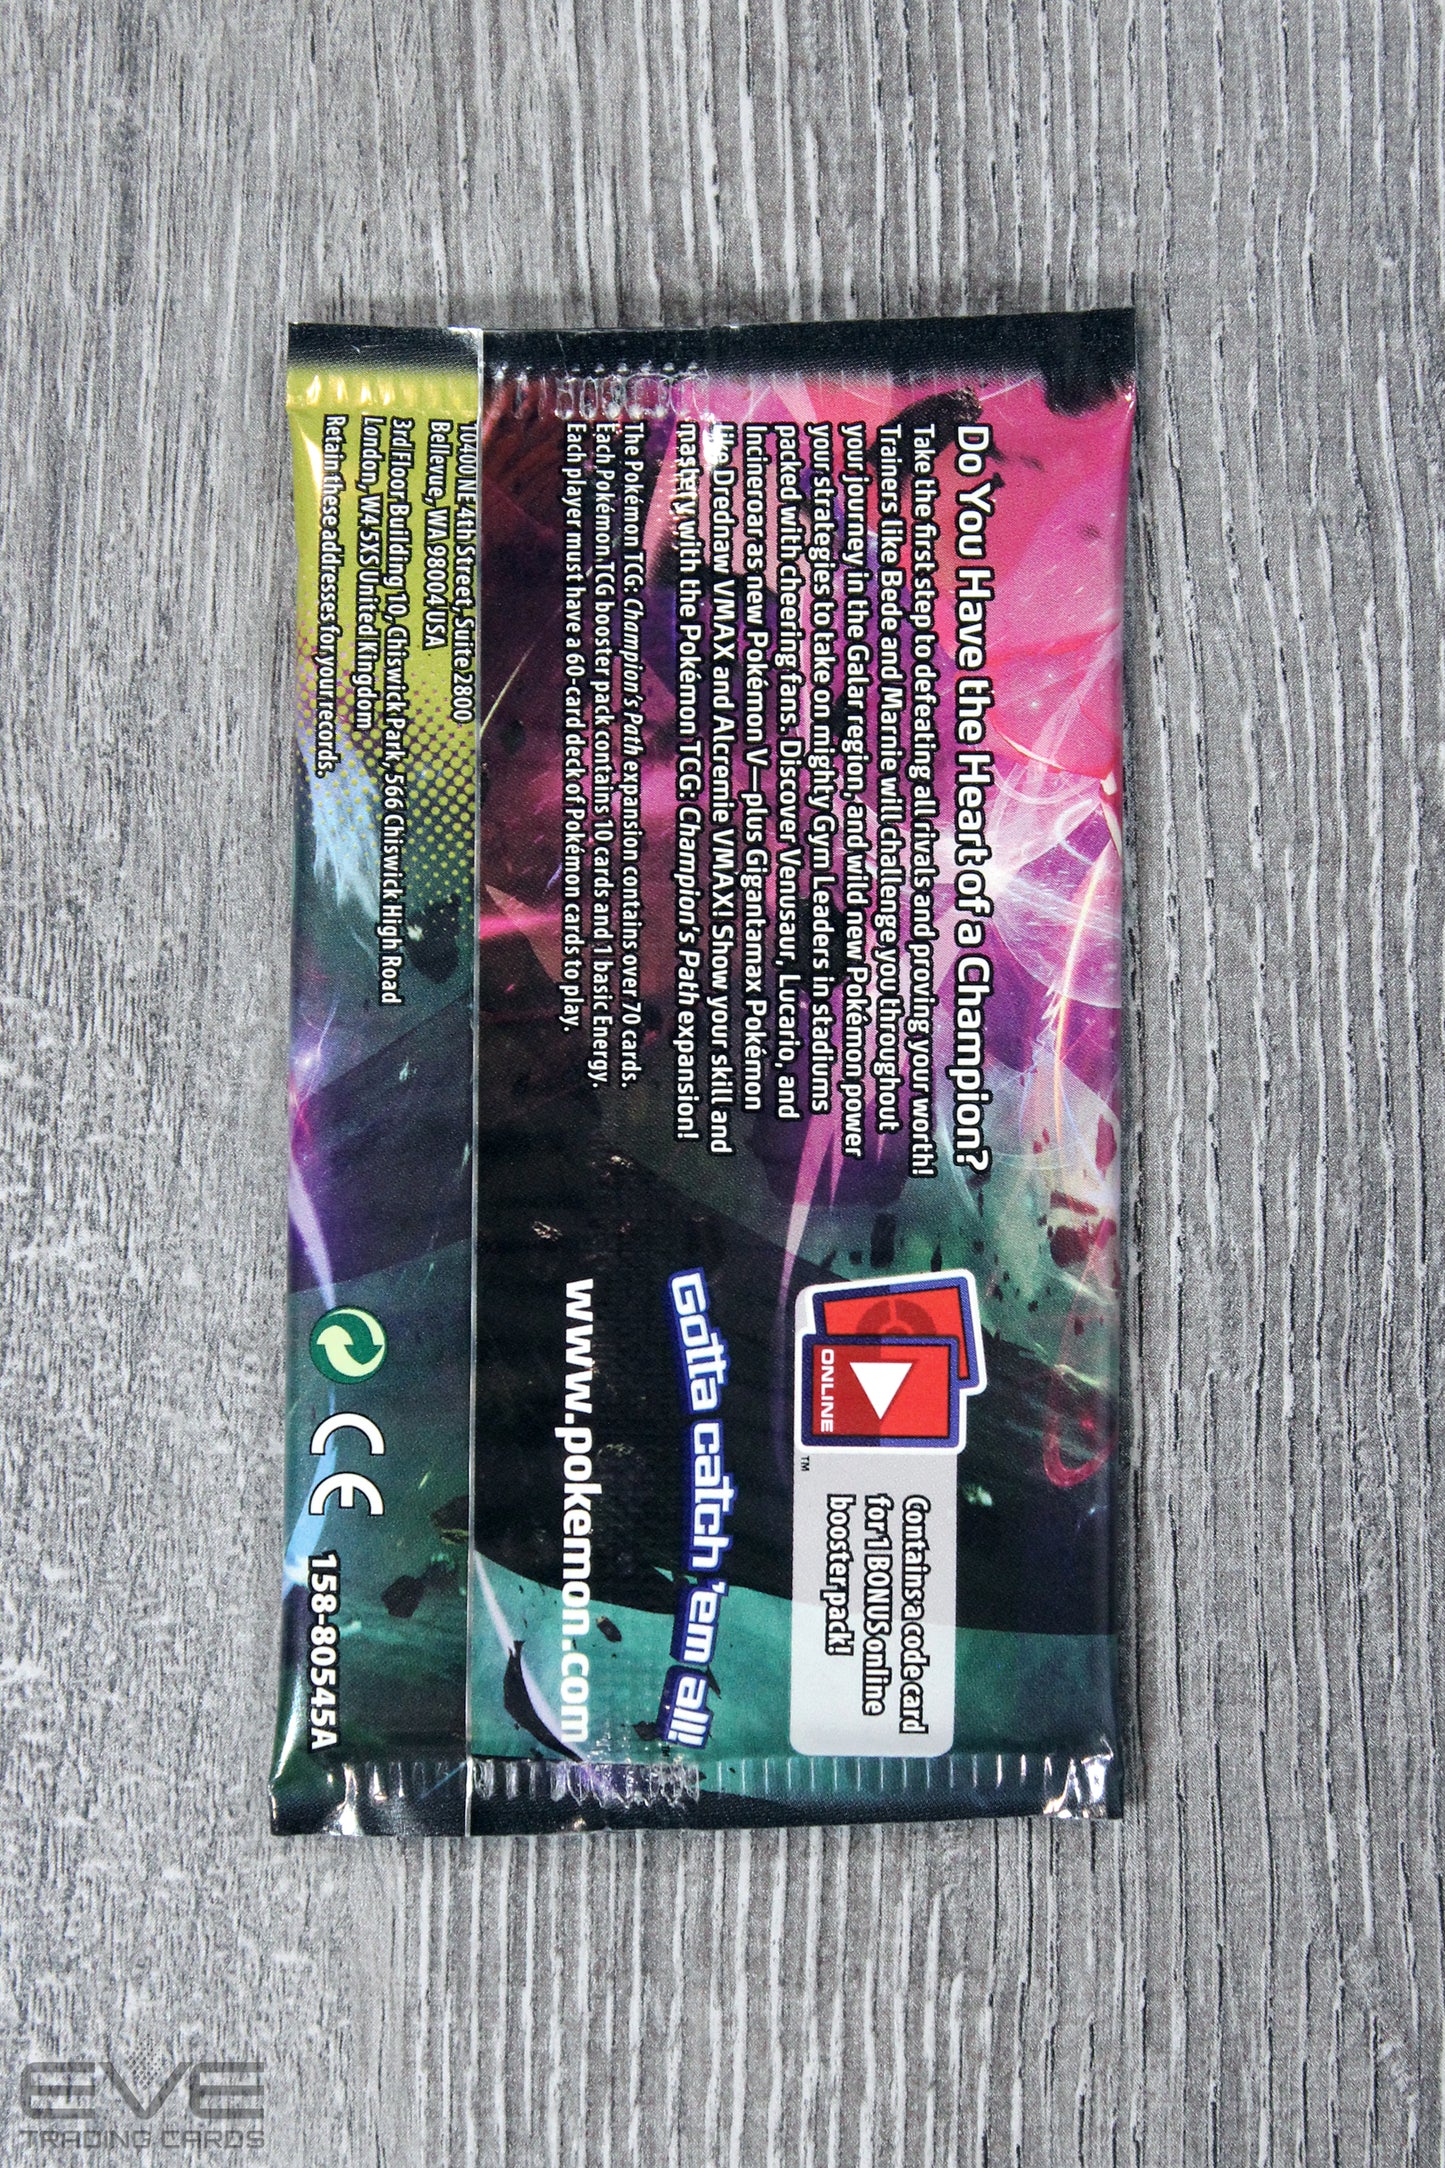 Pokémon TCG: Champion's Path Single Booster Pack